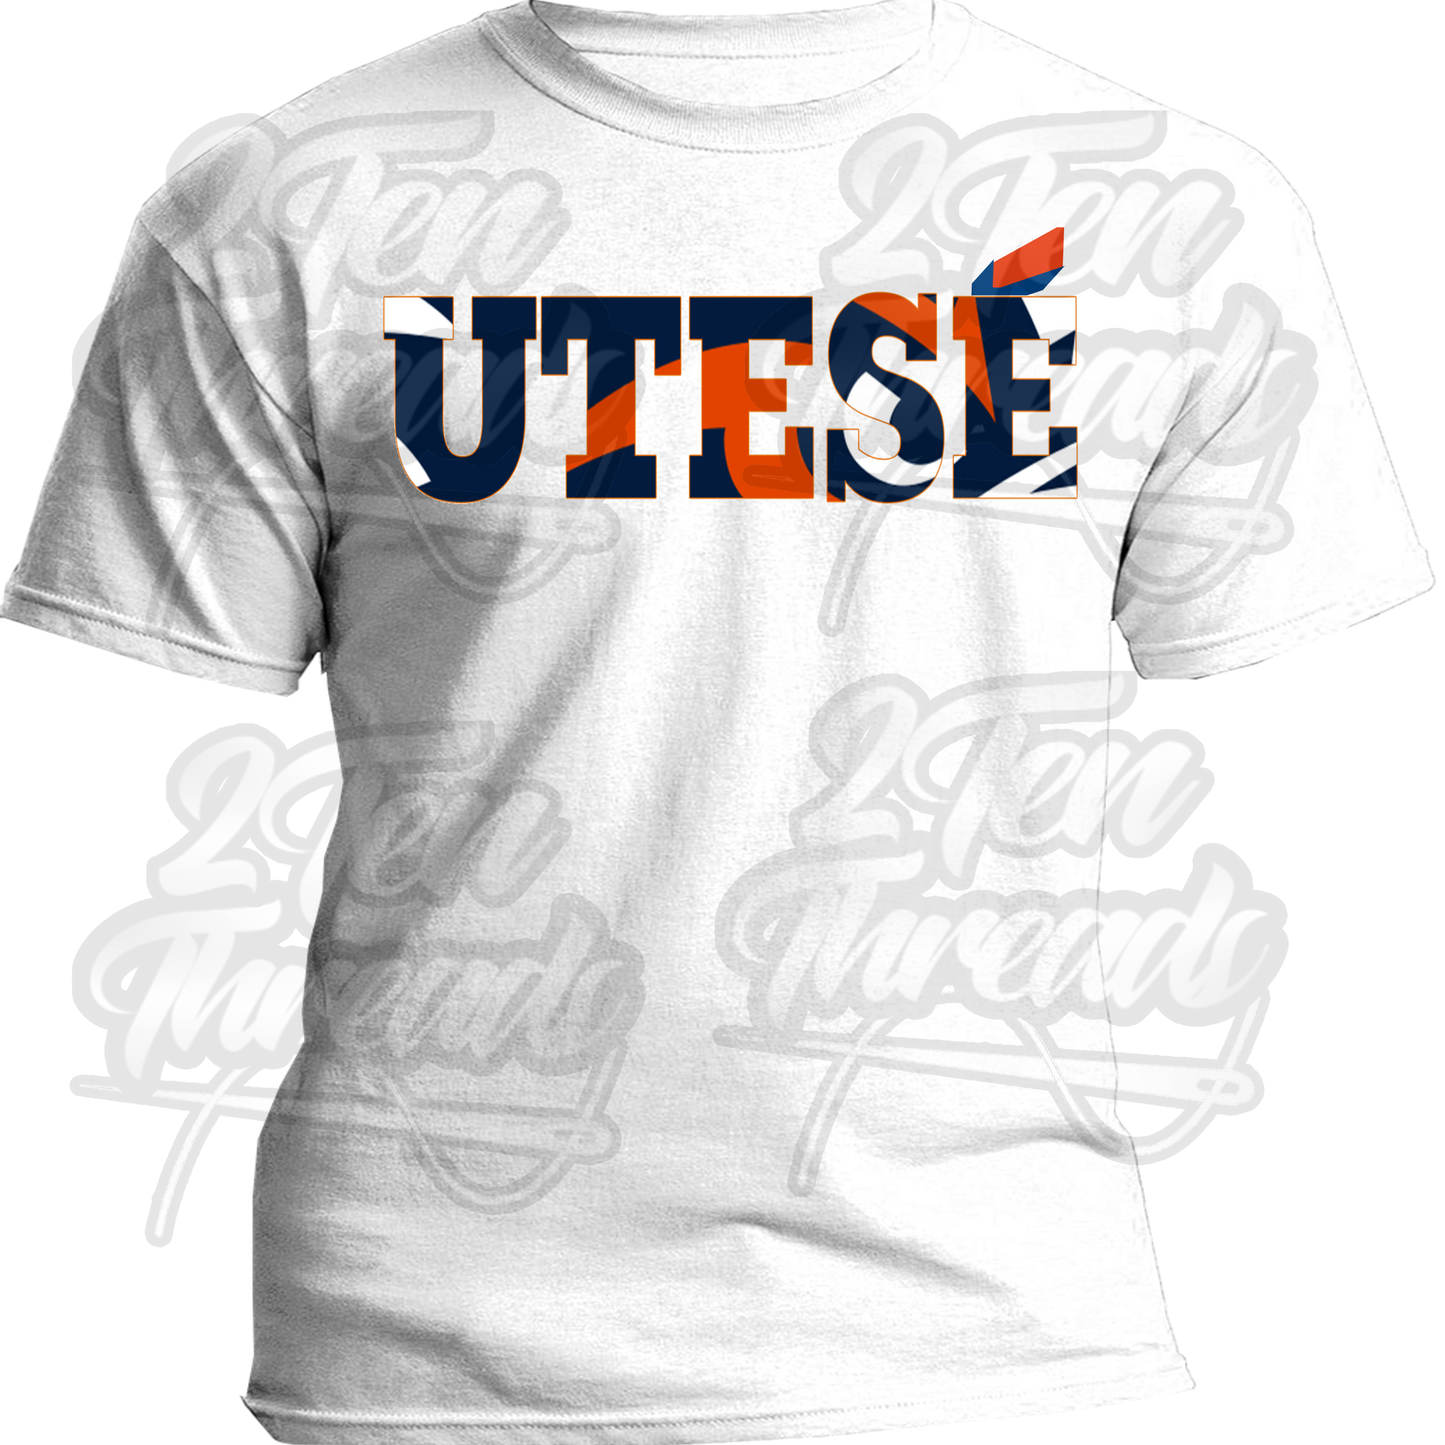 UTESE Shirt